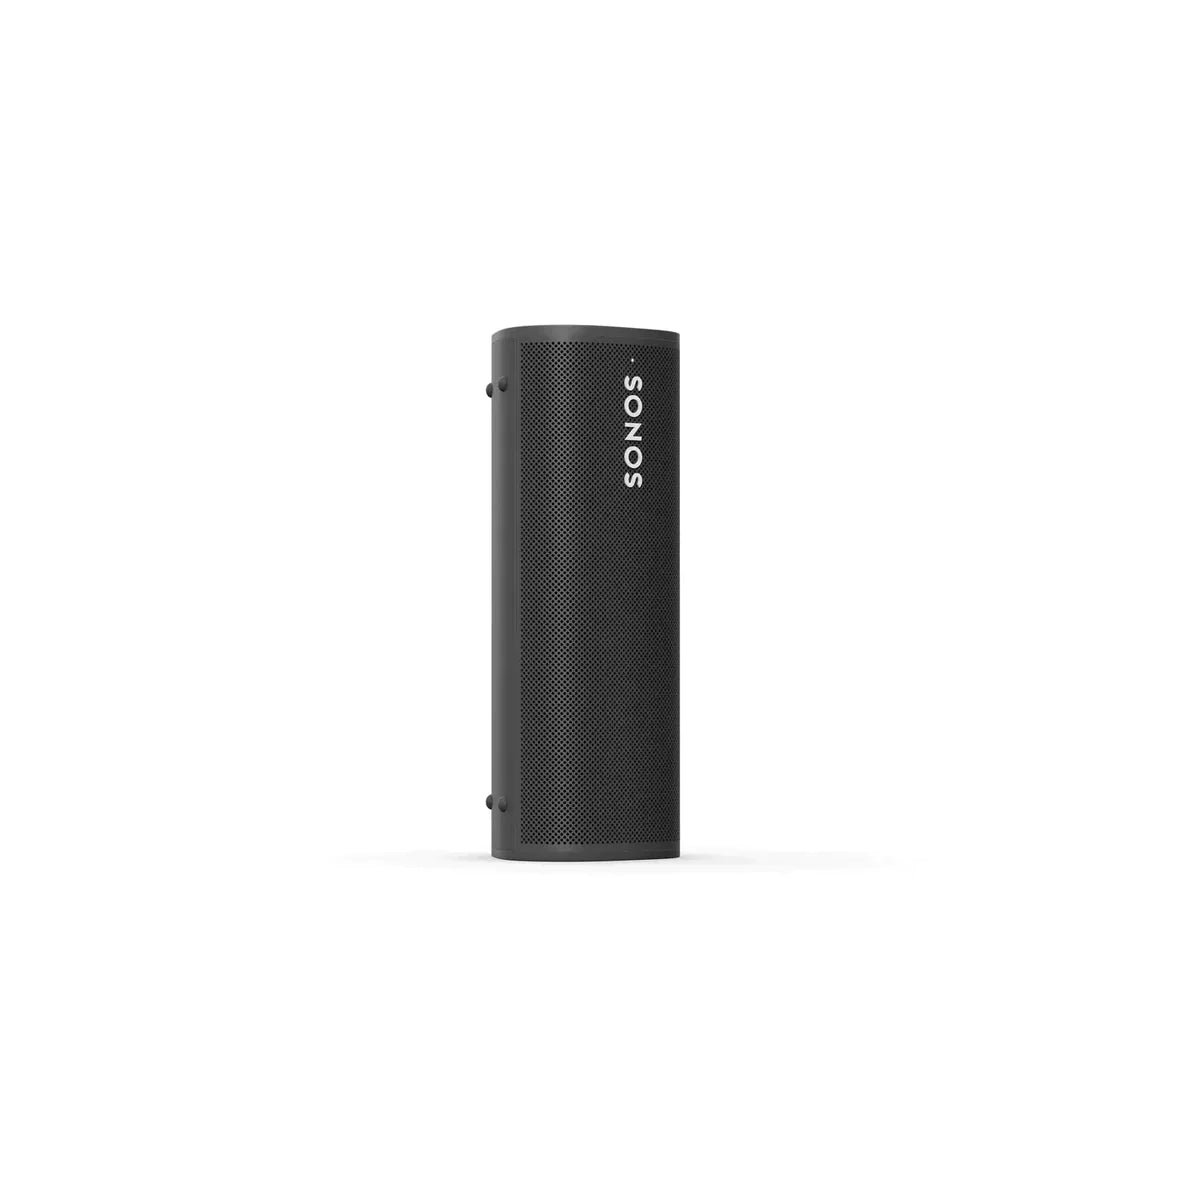 Sonos Roam Smart Speaker with Voice Control - Black - Refurbished Good